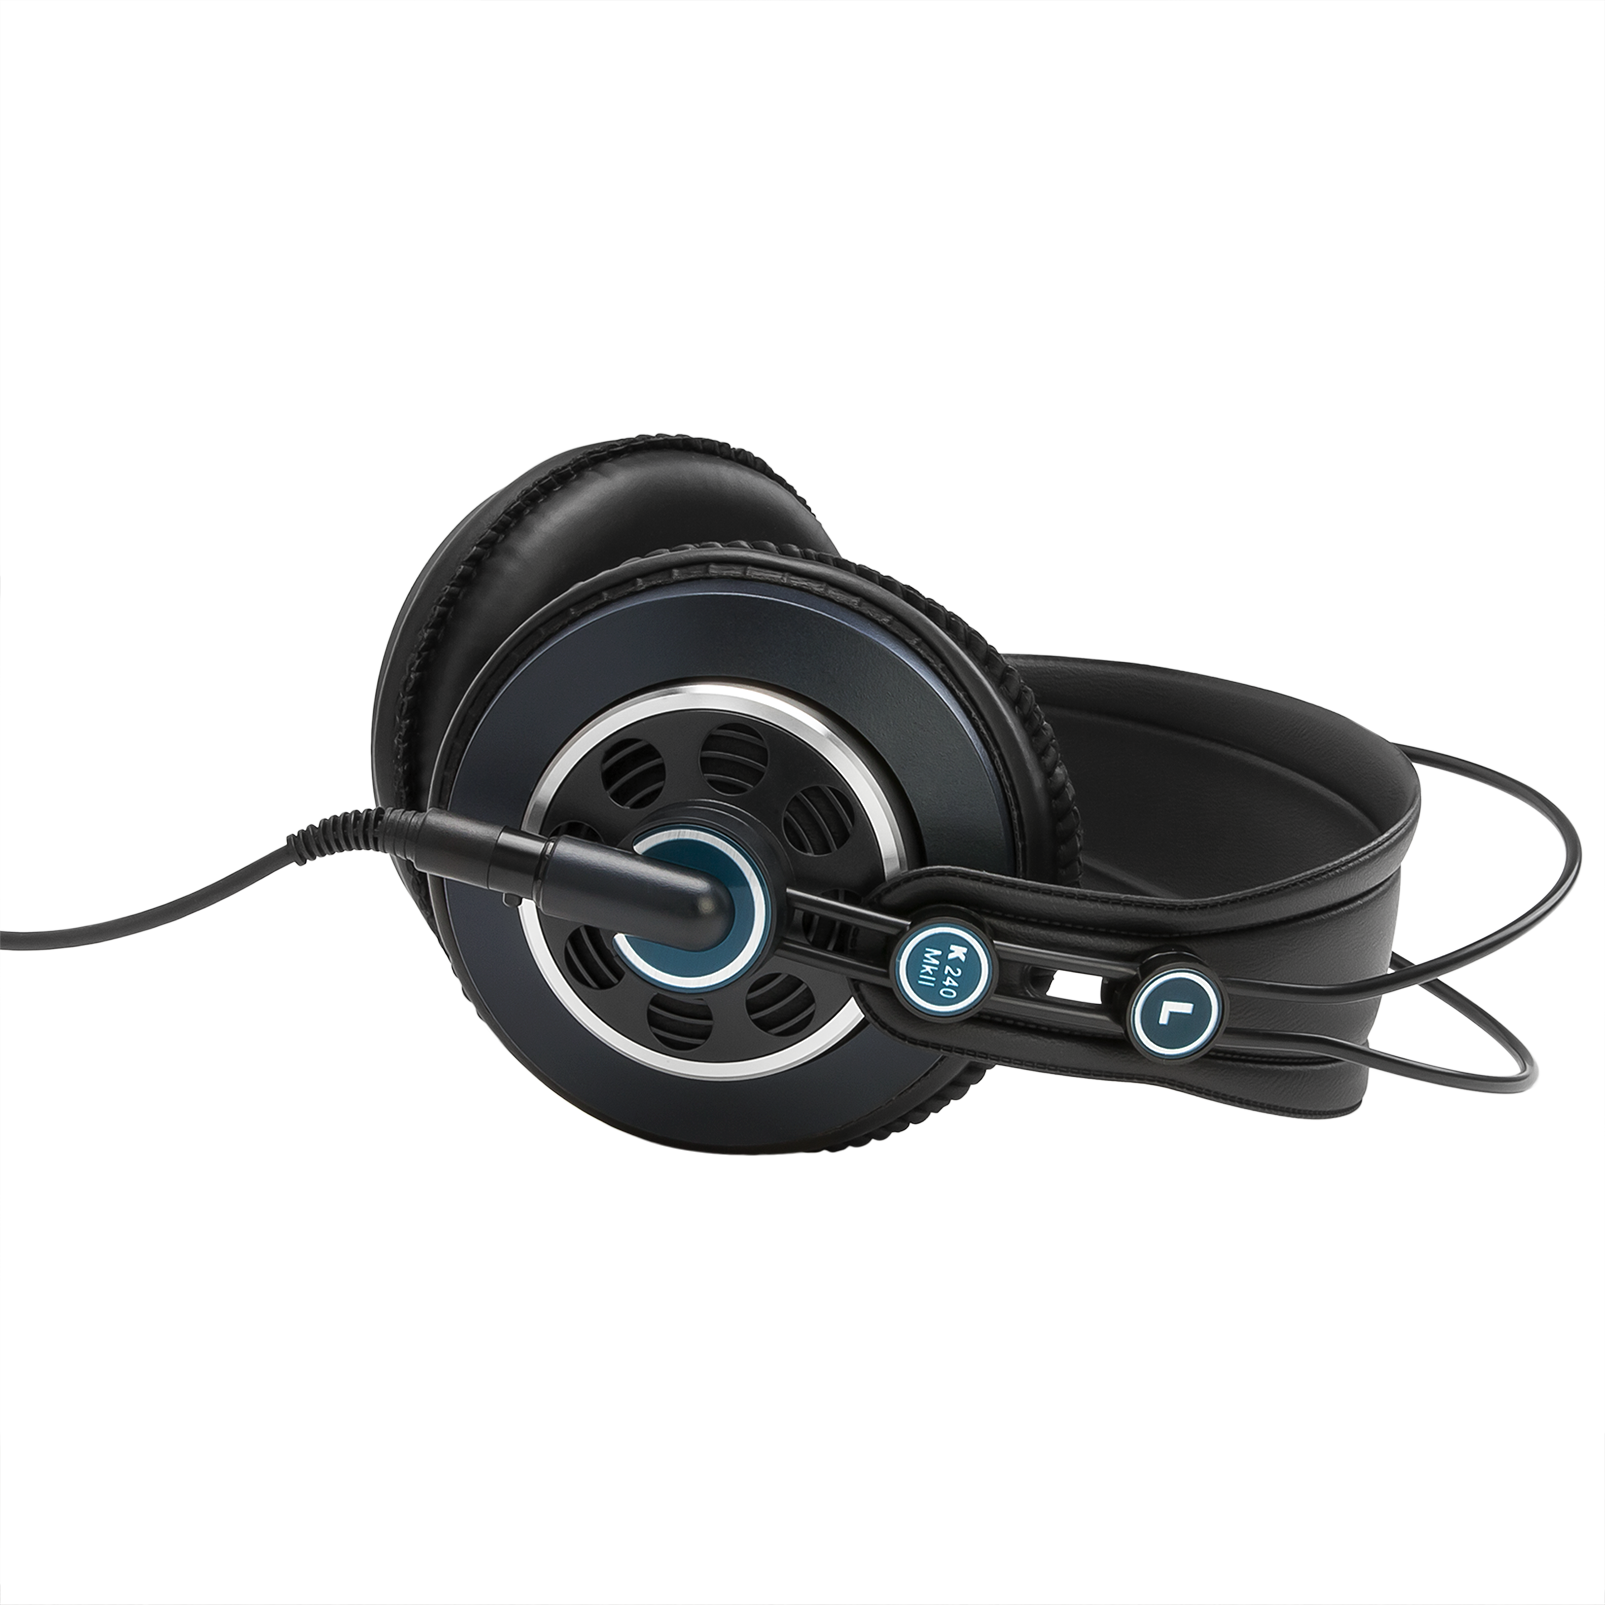 AKG K240 Studio Professional Over Ear Wired Headphones 55 ohms BLACK/GOLD  VTG